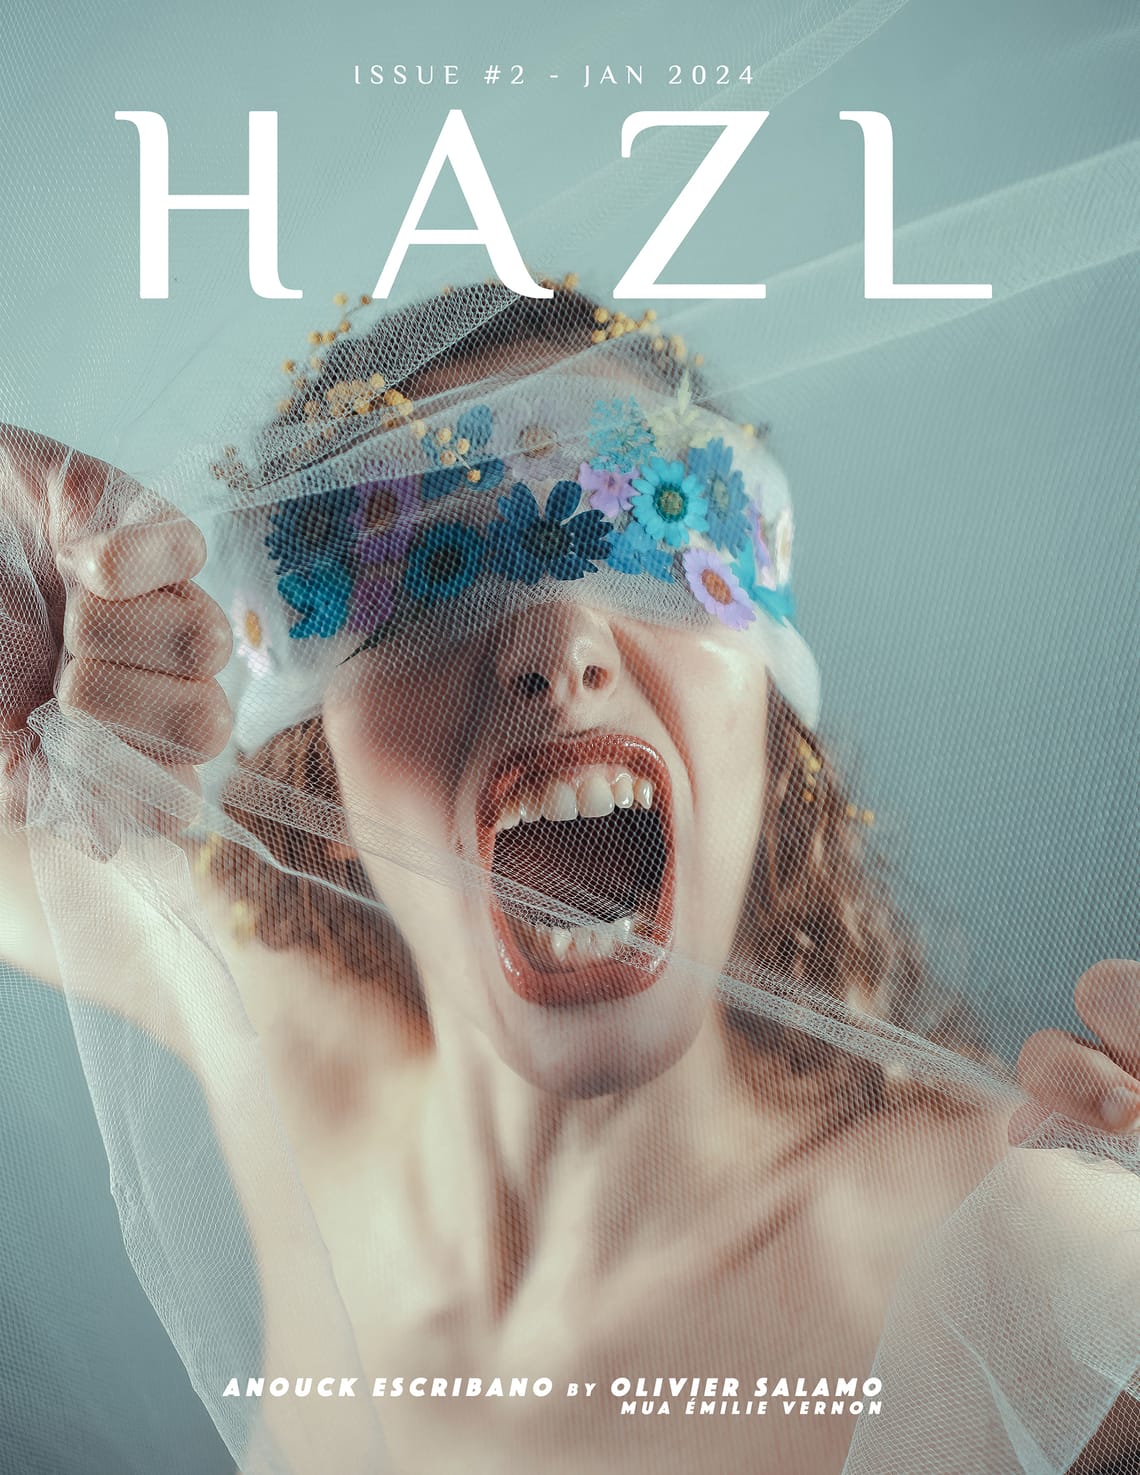 HAZL Magazine Issue #2 -  January 2024 Launched Worldwide